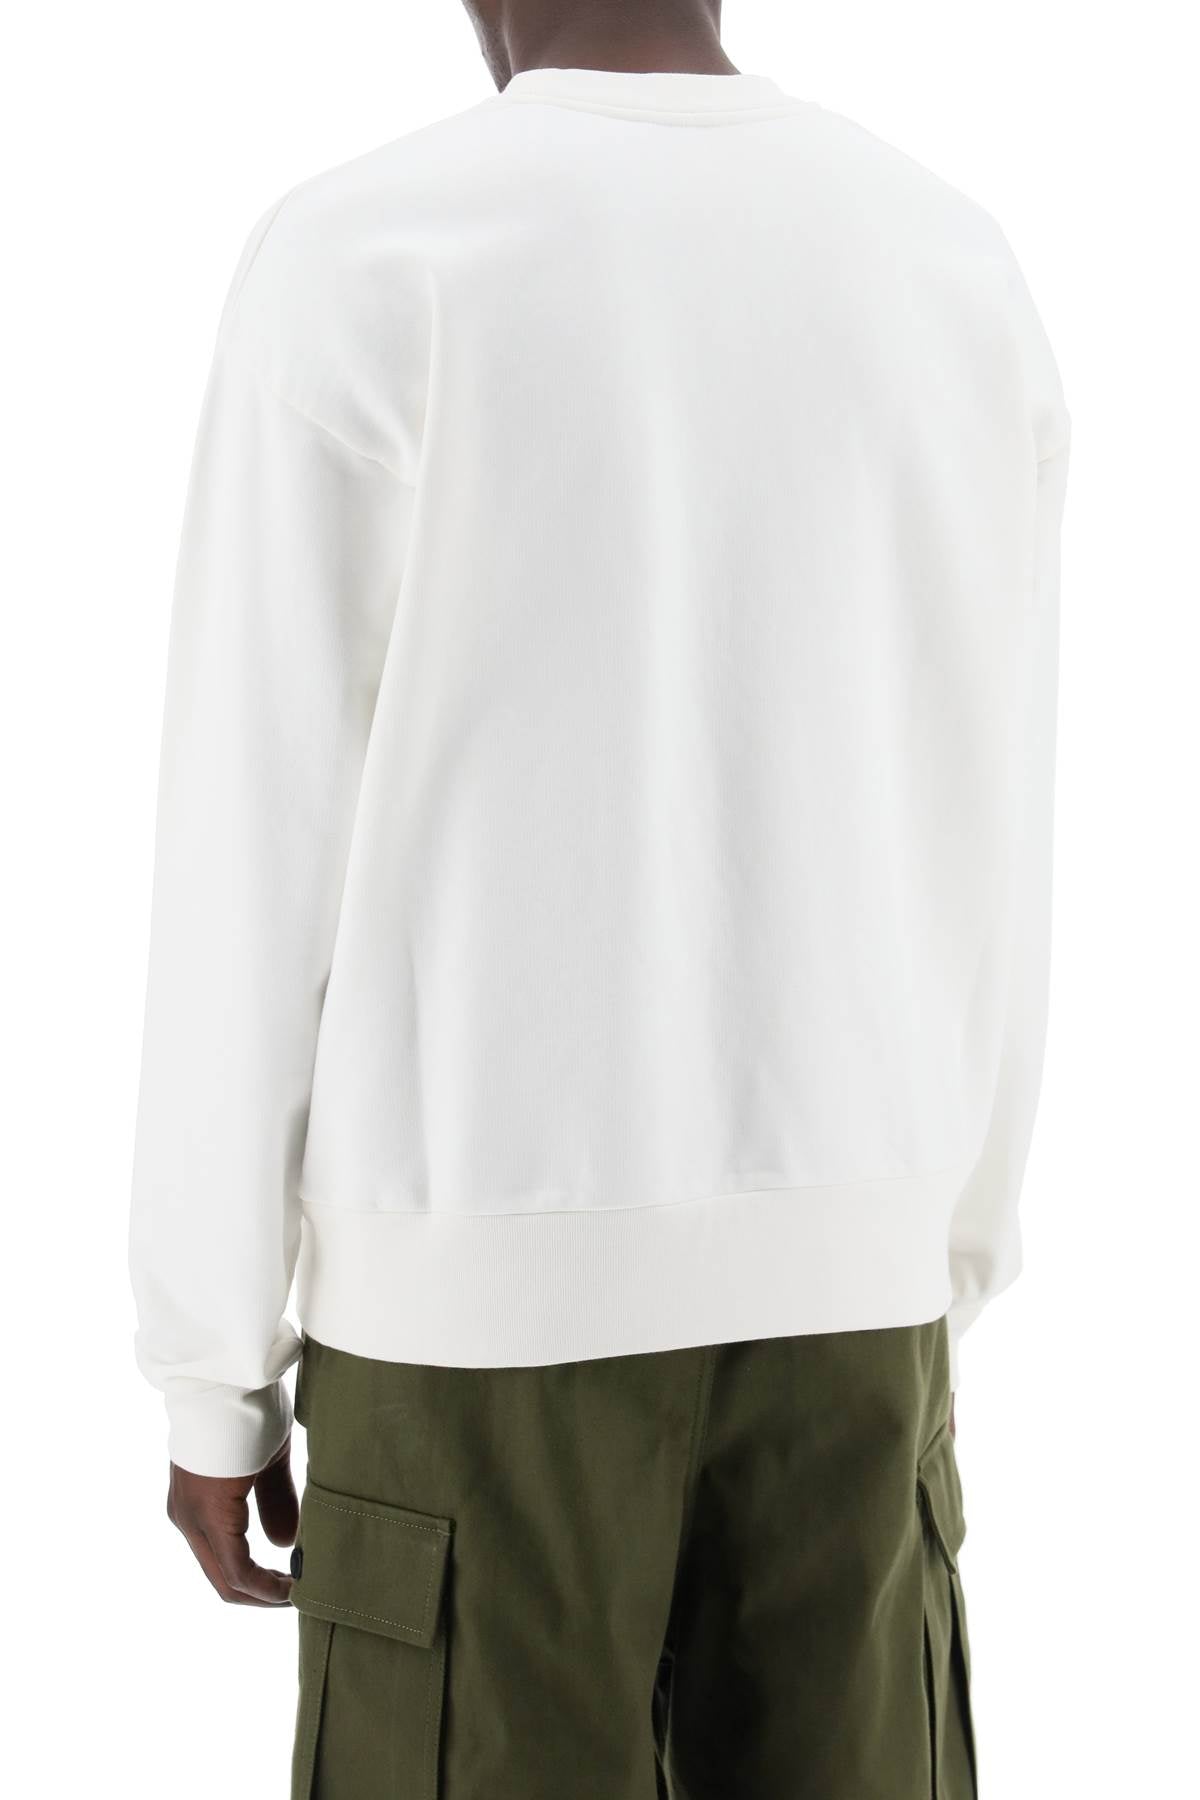 Marni sweatshirt with plaid logo-men > clothing > t-shirts and sweatshirts > sweatshirts-Marni-Urbanheer